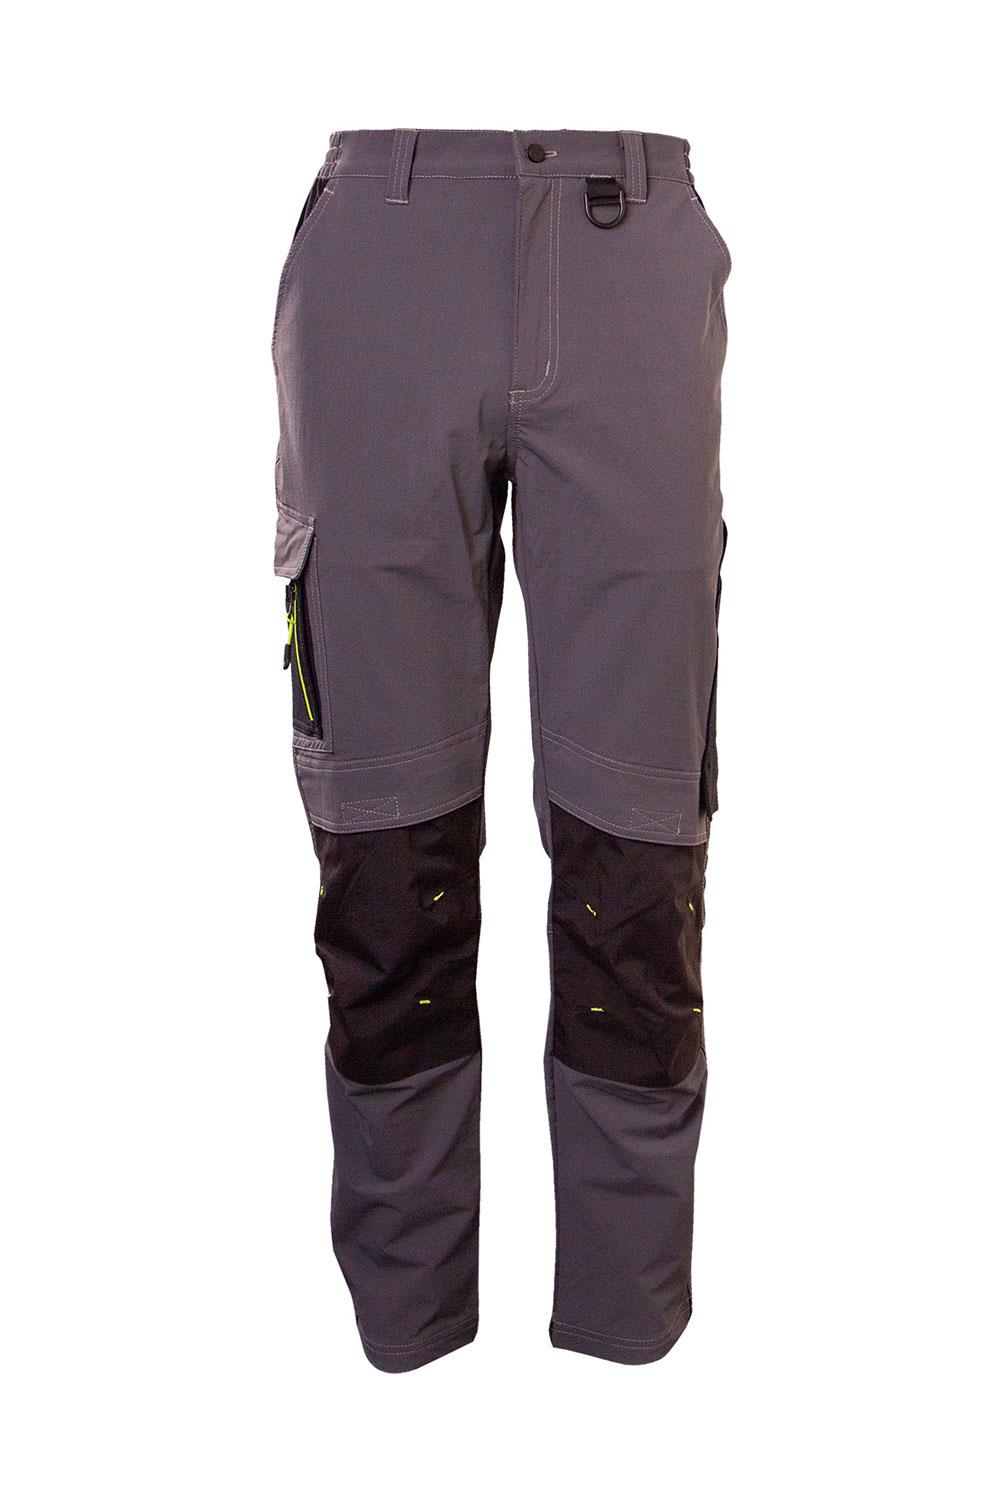 FLEX Workwear grey/black four way stretch multi-pocket work trouser